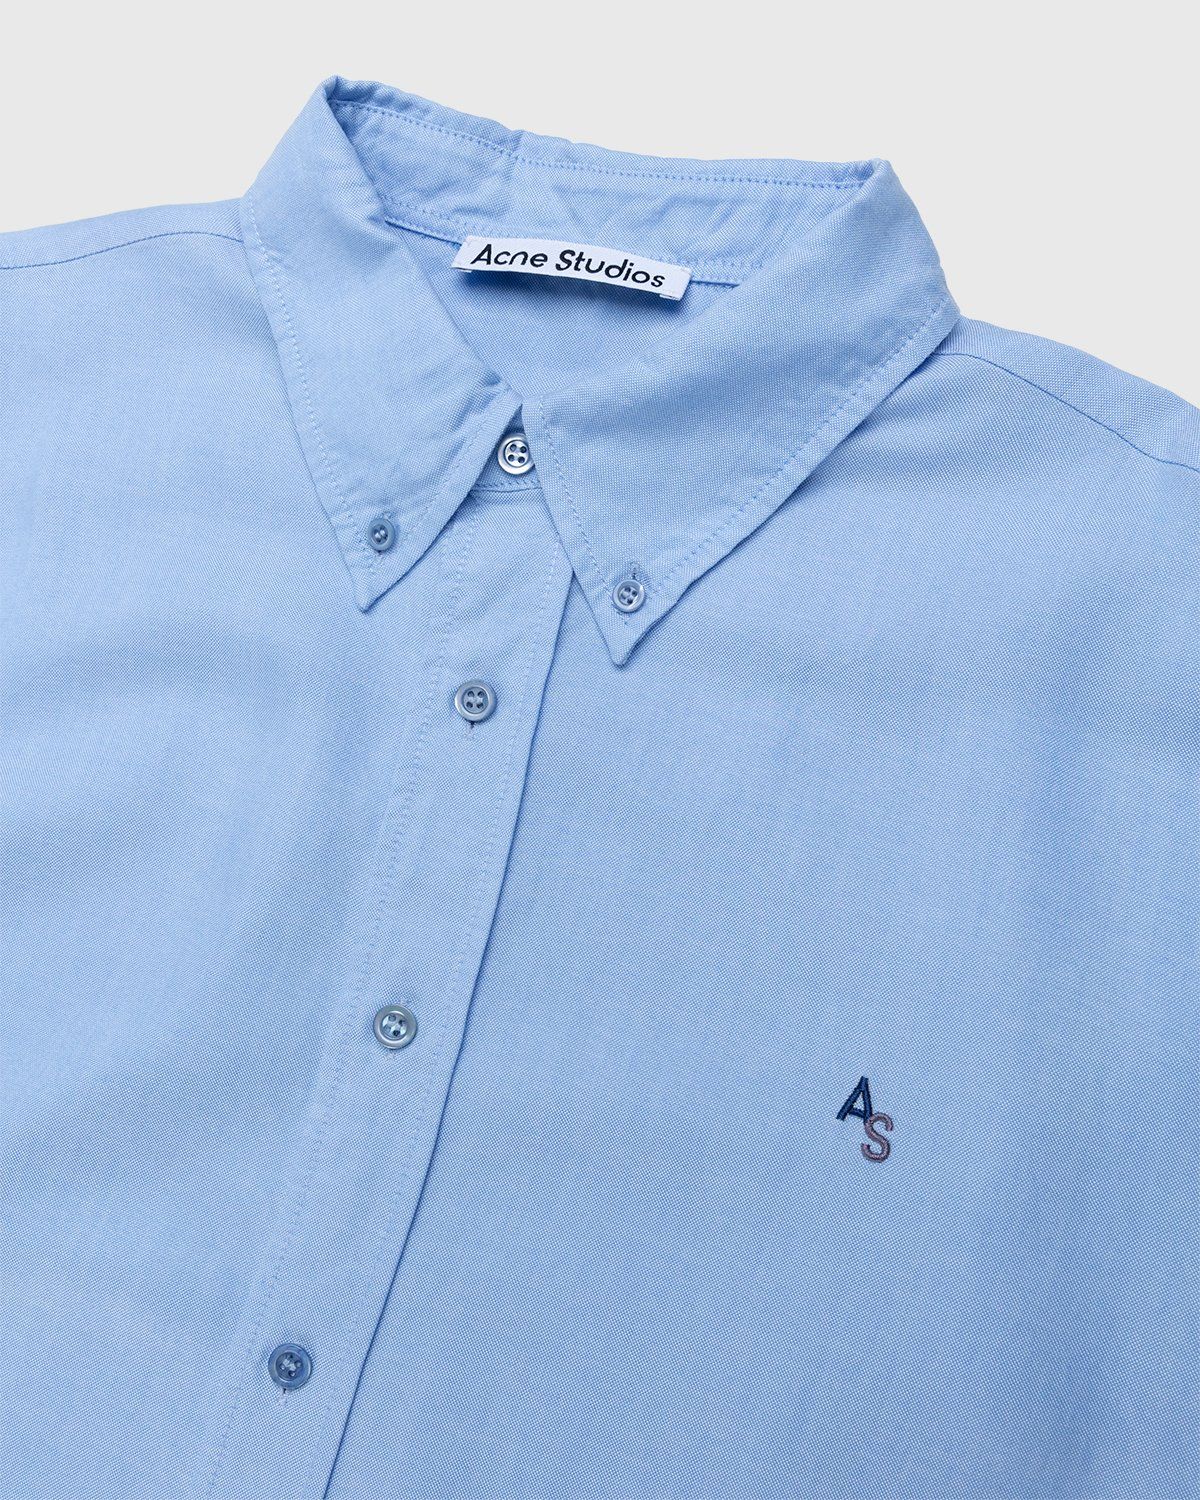 Acne Studios – Classic Monogram Button-Up Shirt Light Blue - Image 4